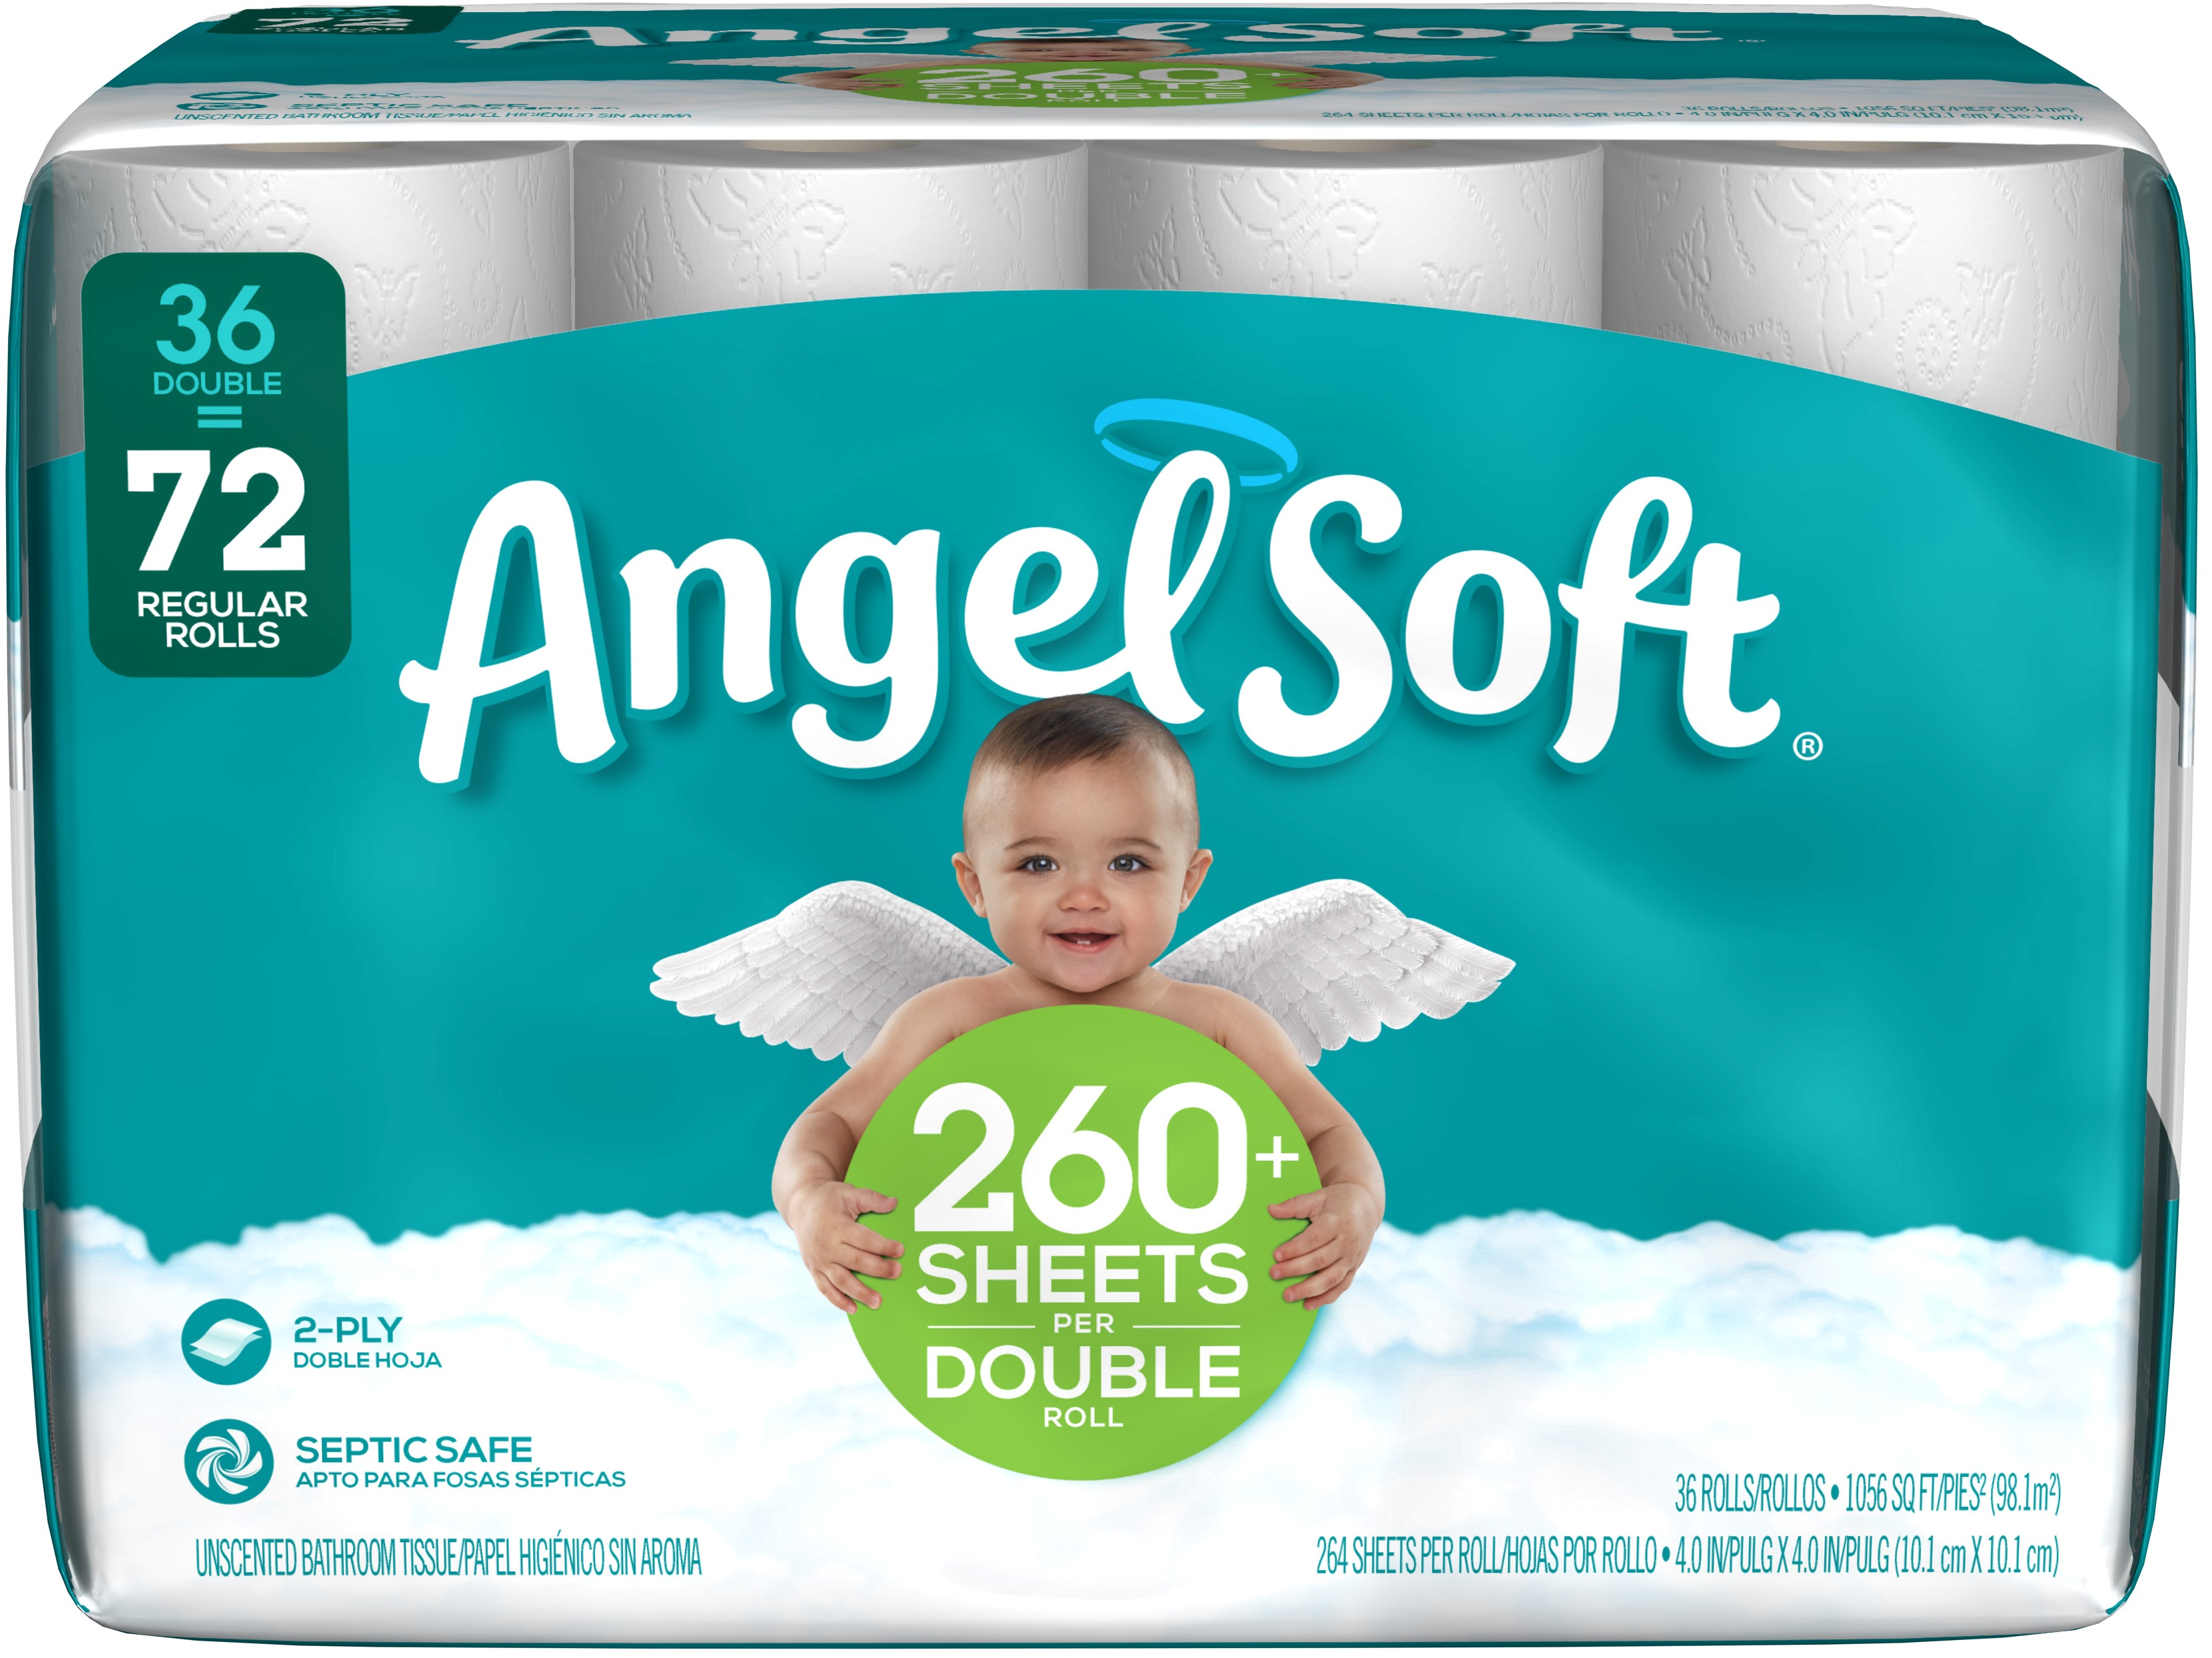 Angel Soft Toilet Paper, 36 Double Rolls (= 72 Regular Rolls) - image 3 of 12